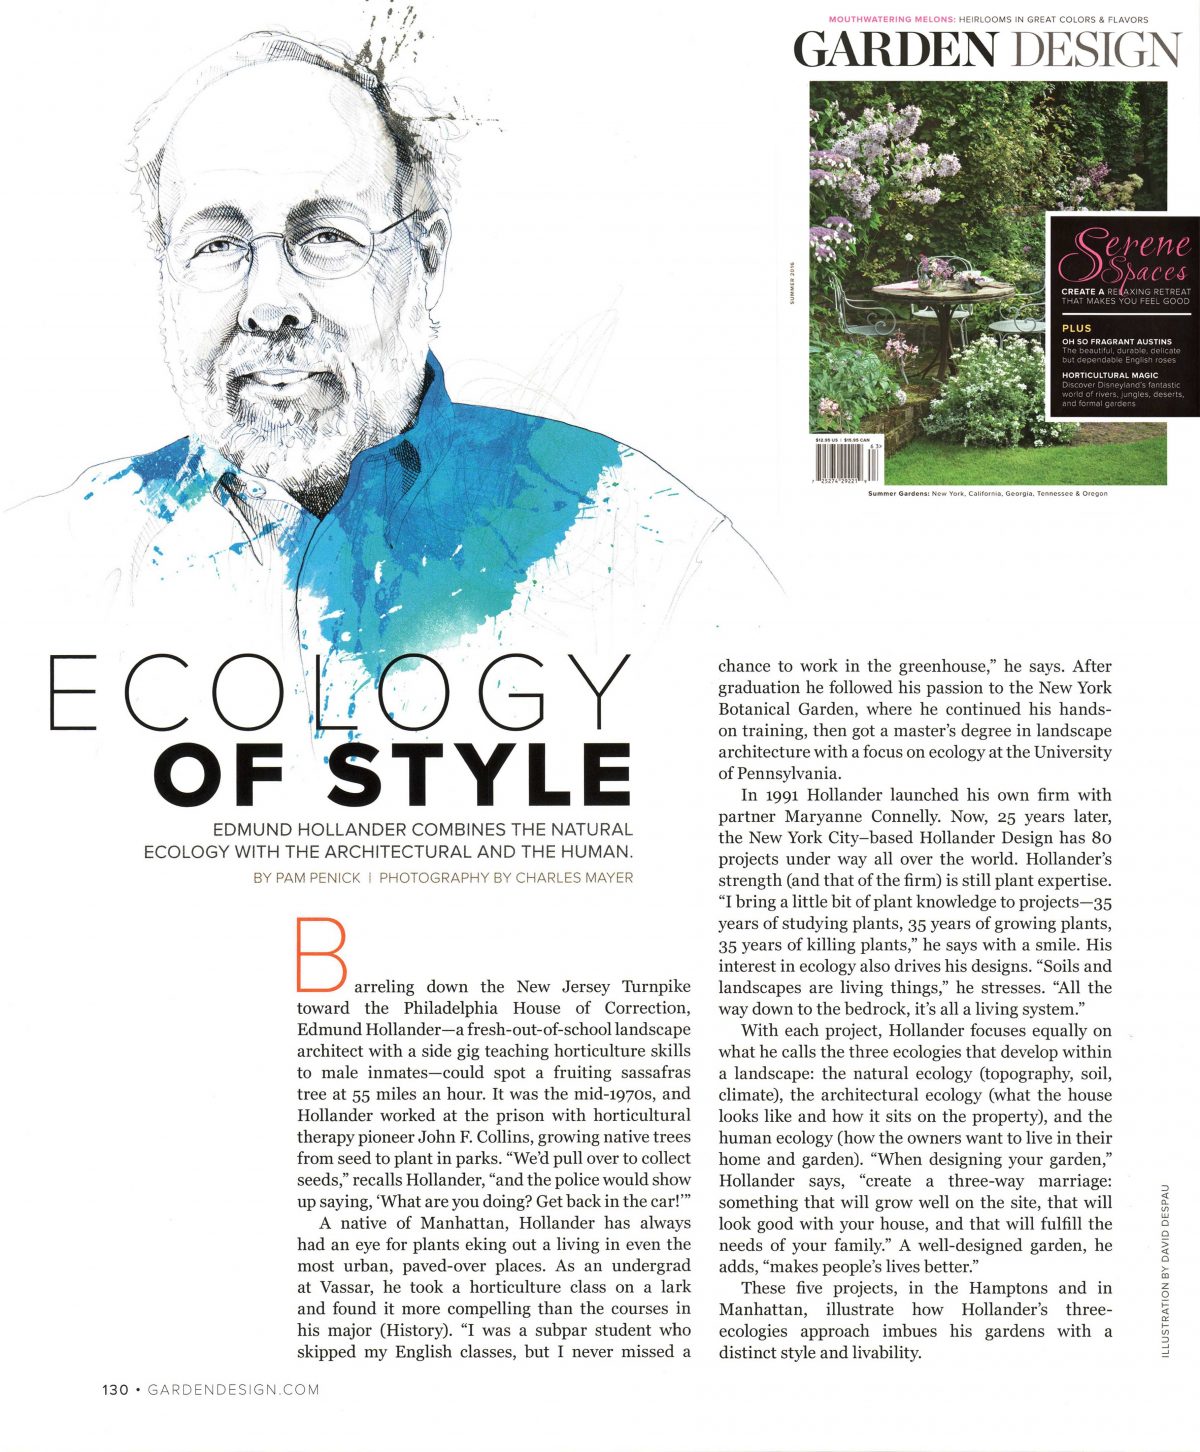 Garden Design Interviews Ed Hollander